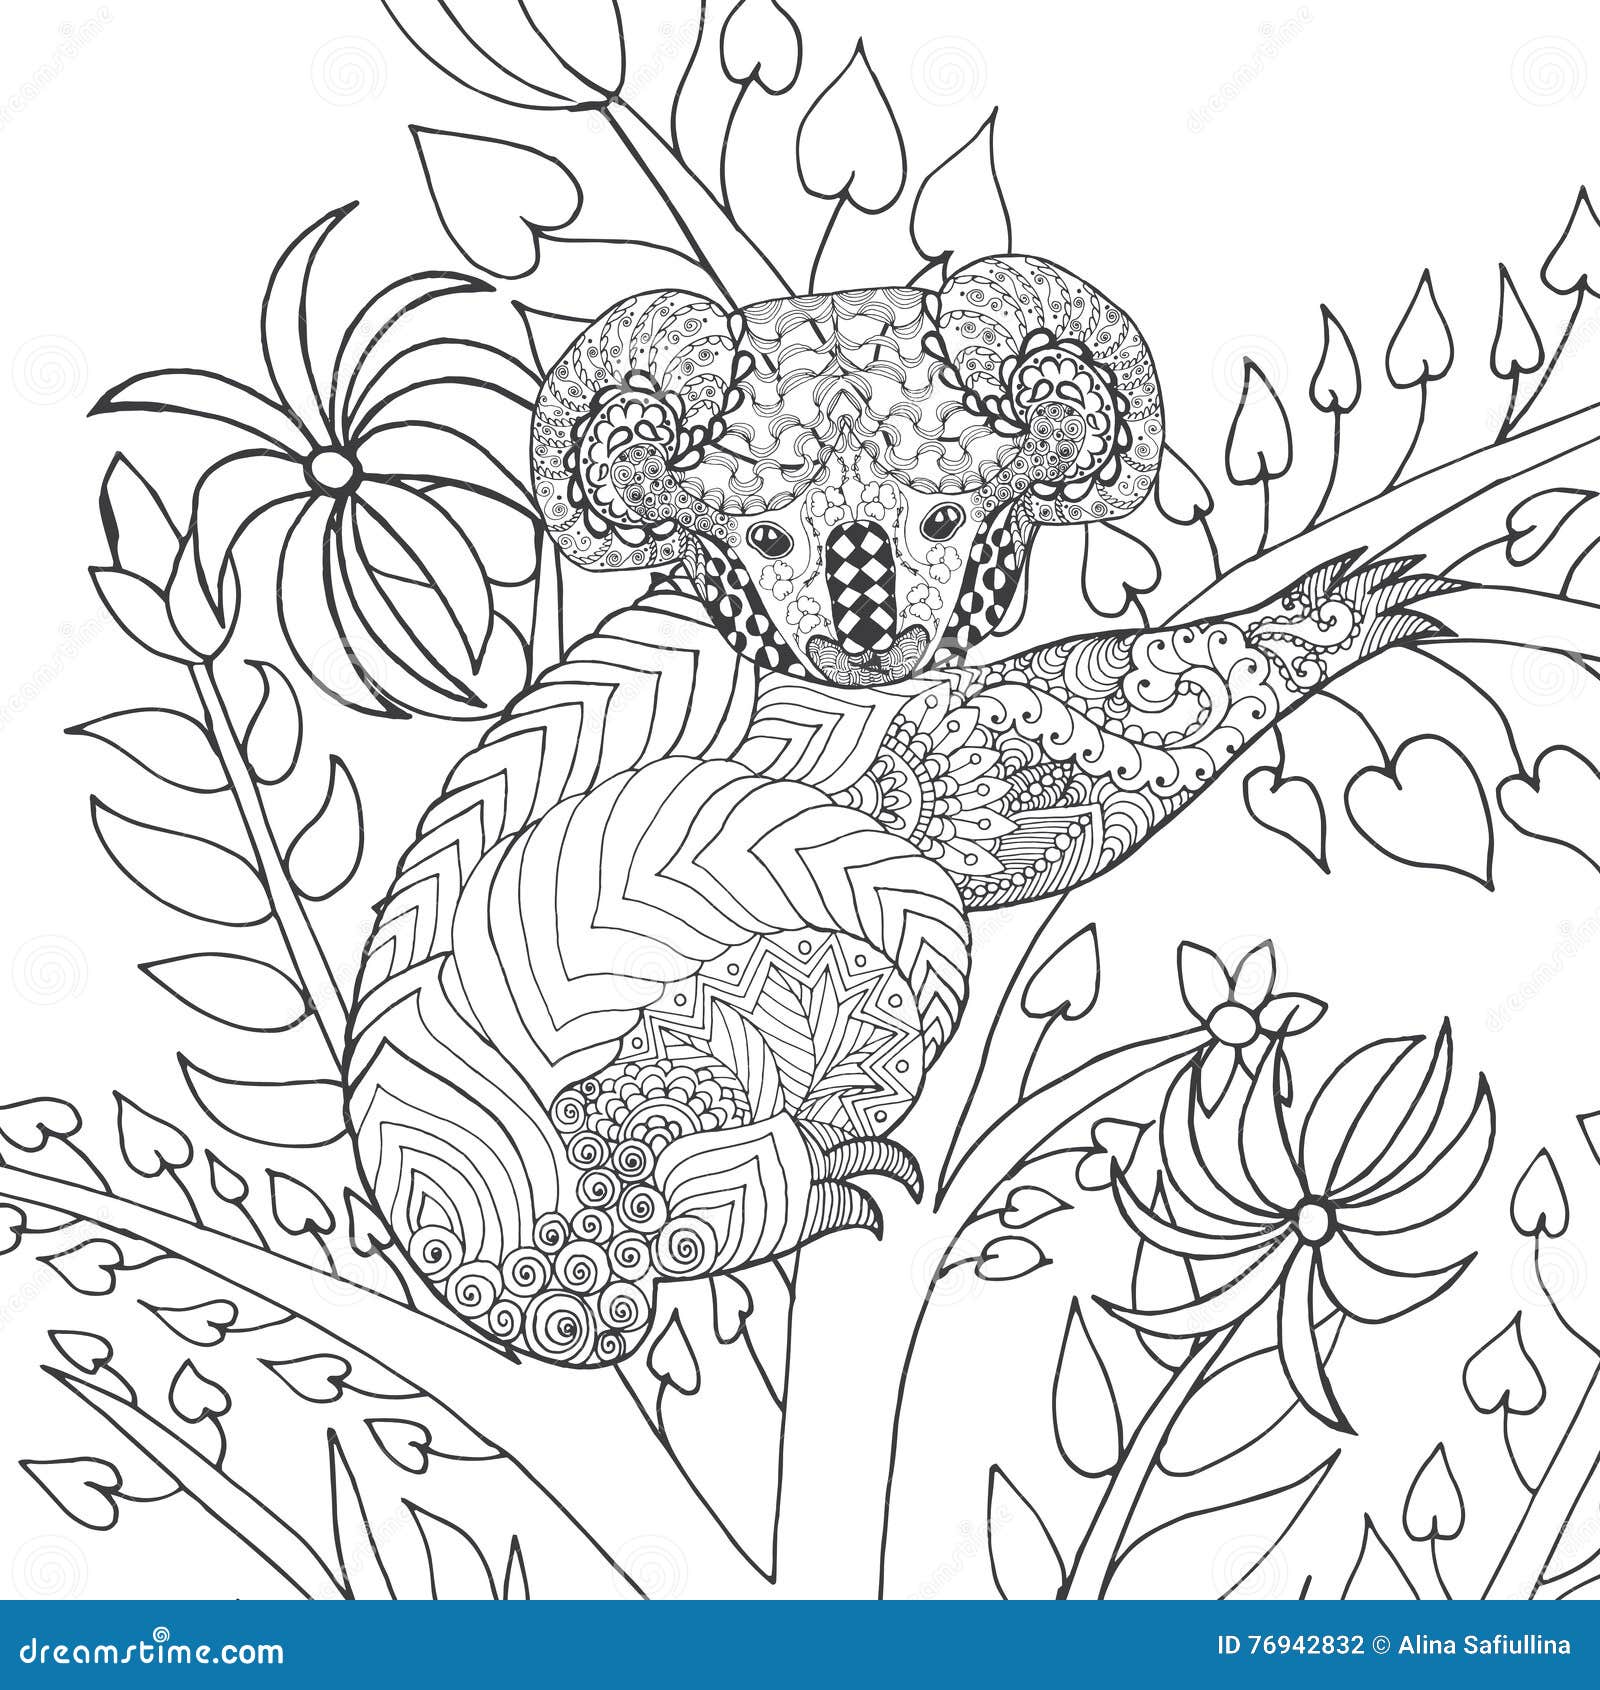 Koala on Tree Coloring Page. Stock Vector - Illustration of bear ...